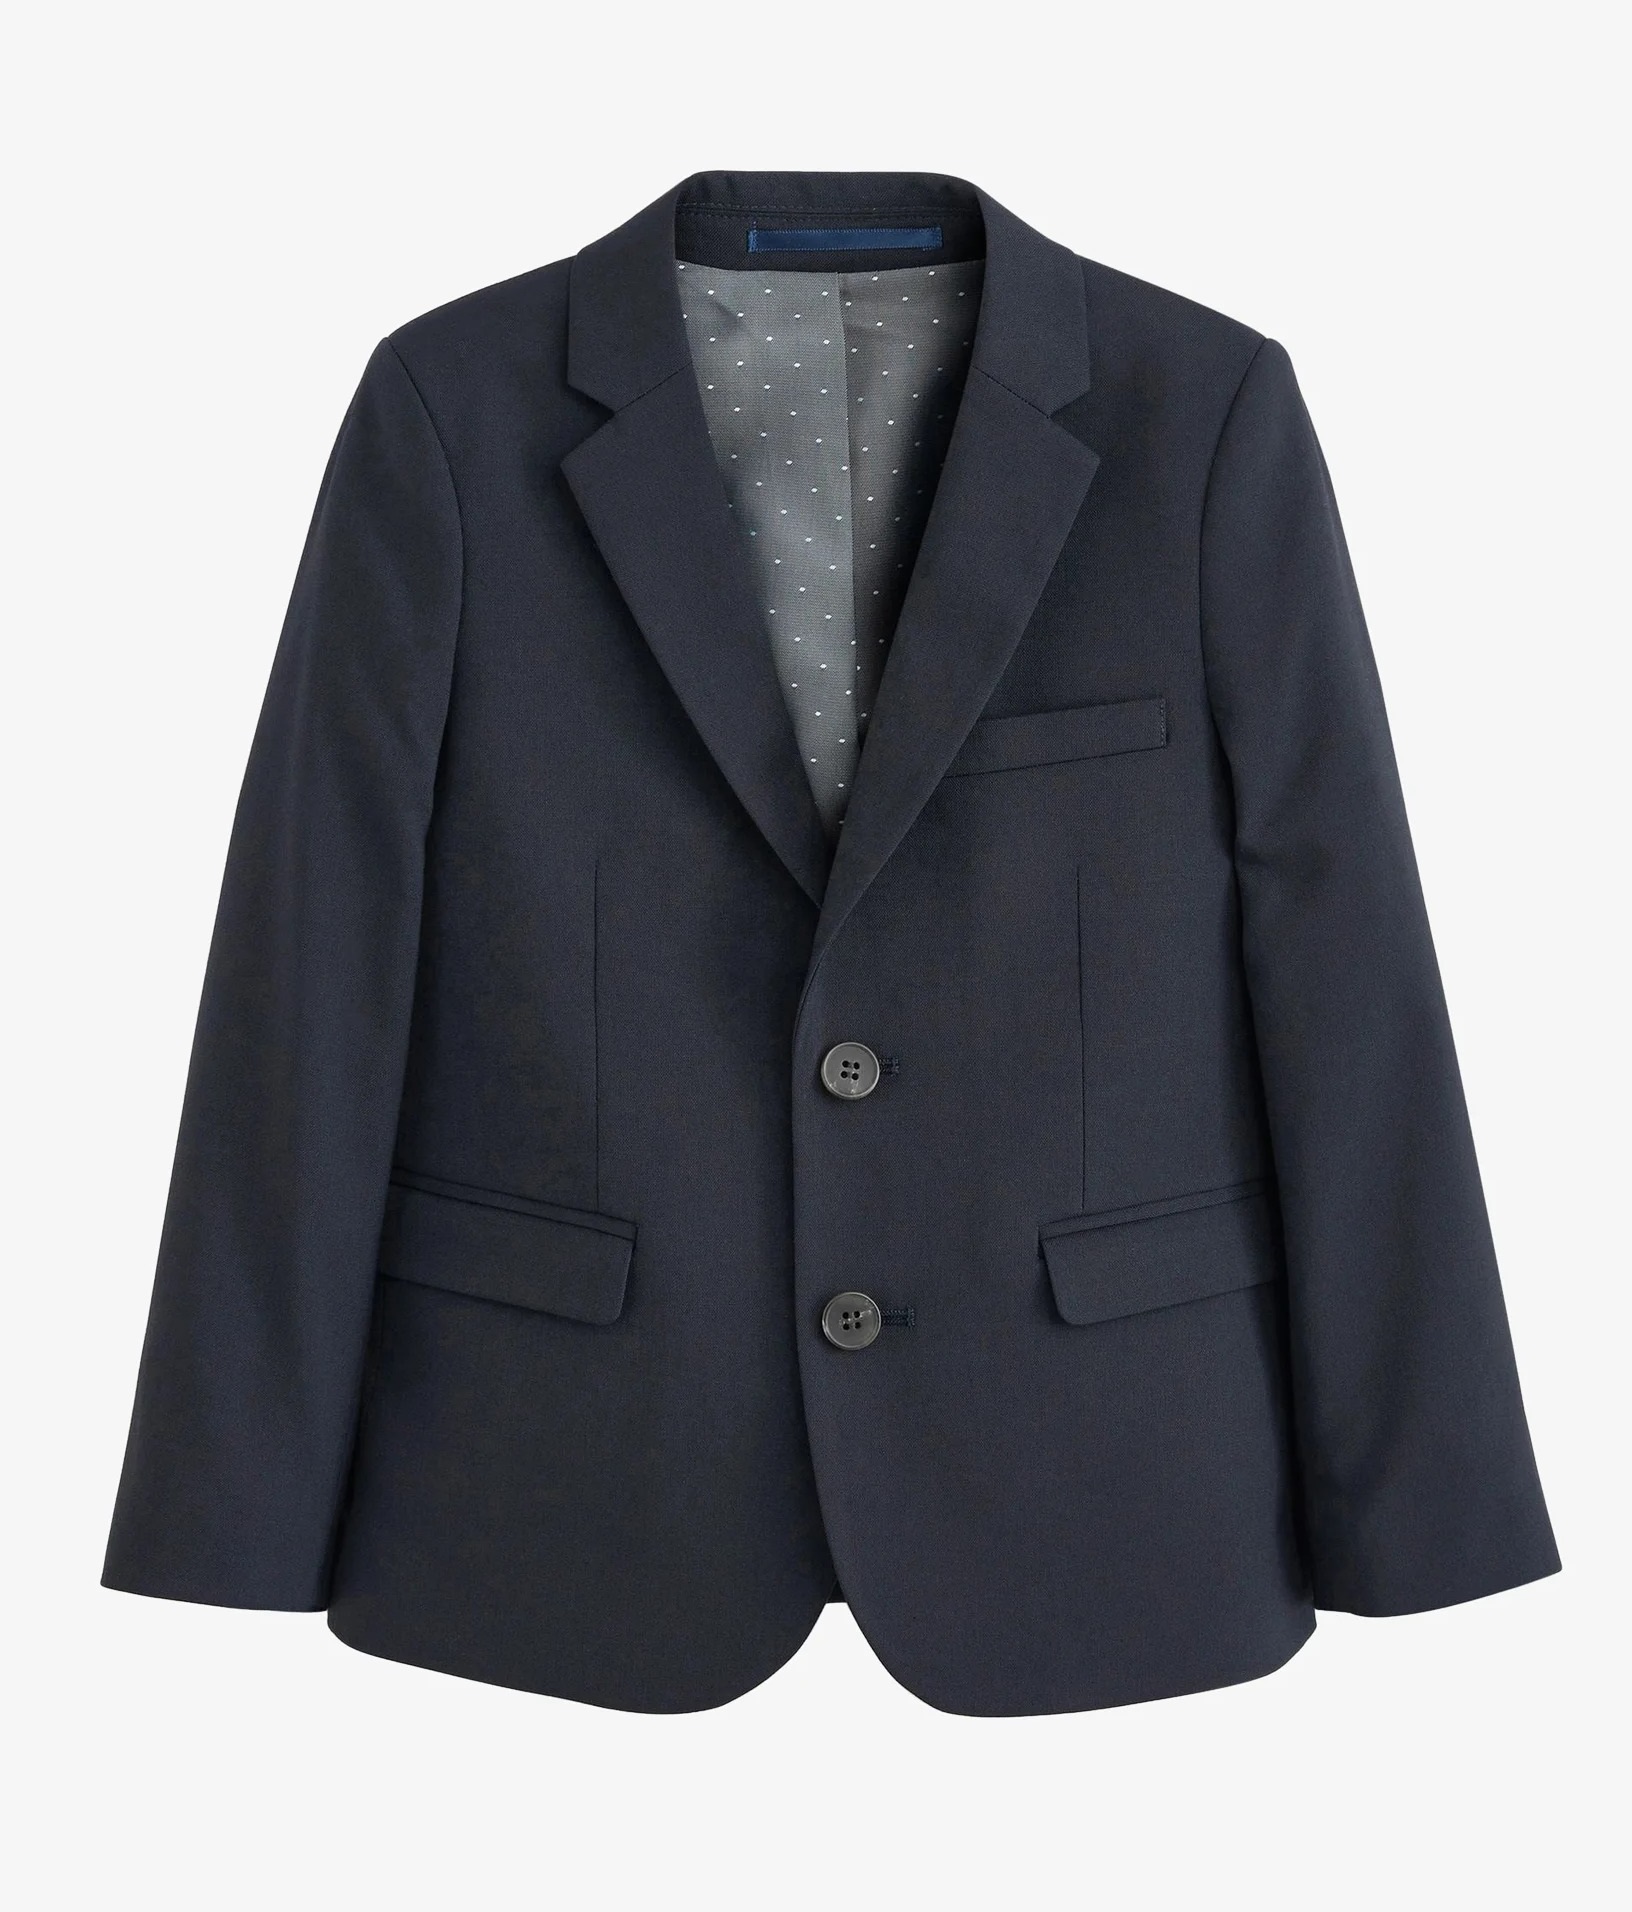 Пиджак Next Tailored Fit Suit, темно-синий пиджак uniqlo relaxed fit tailored темно синий